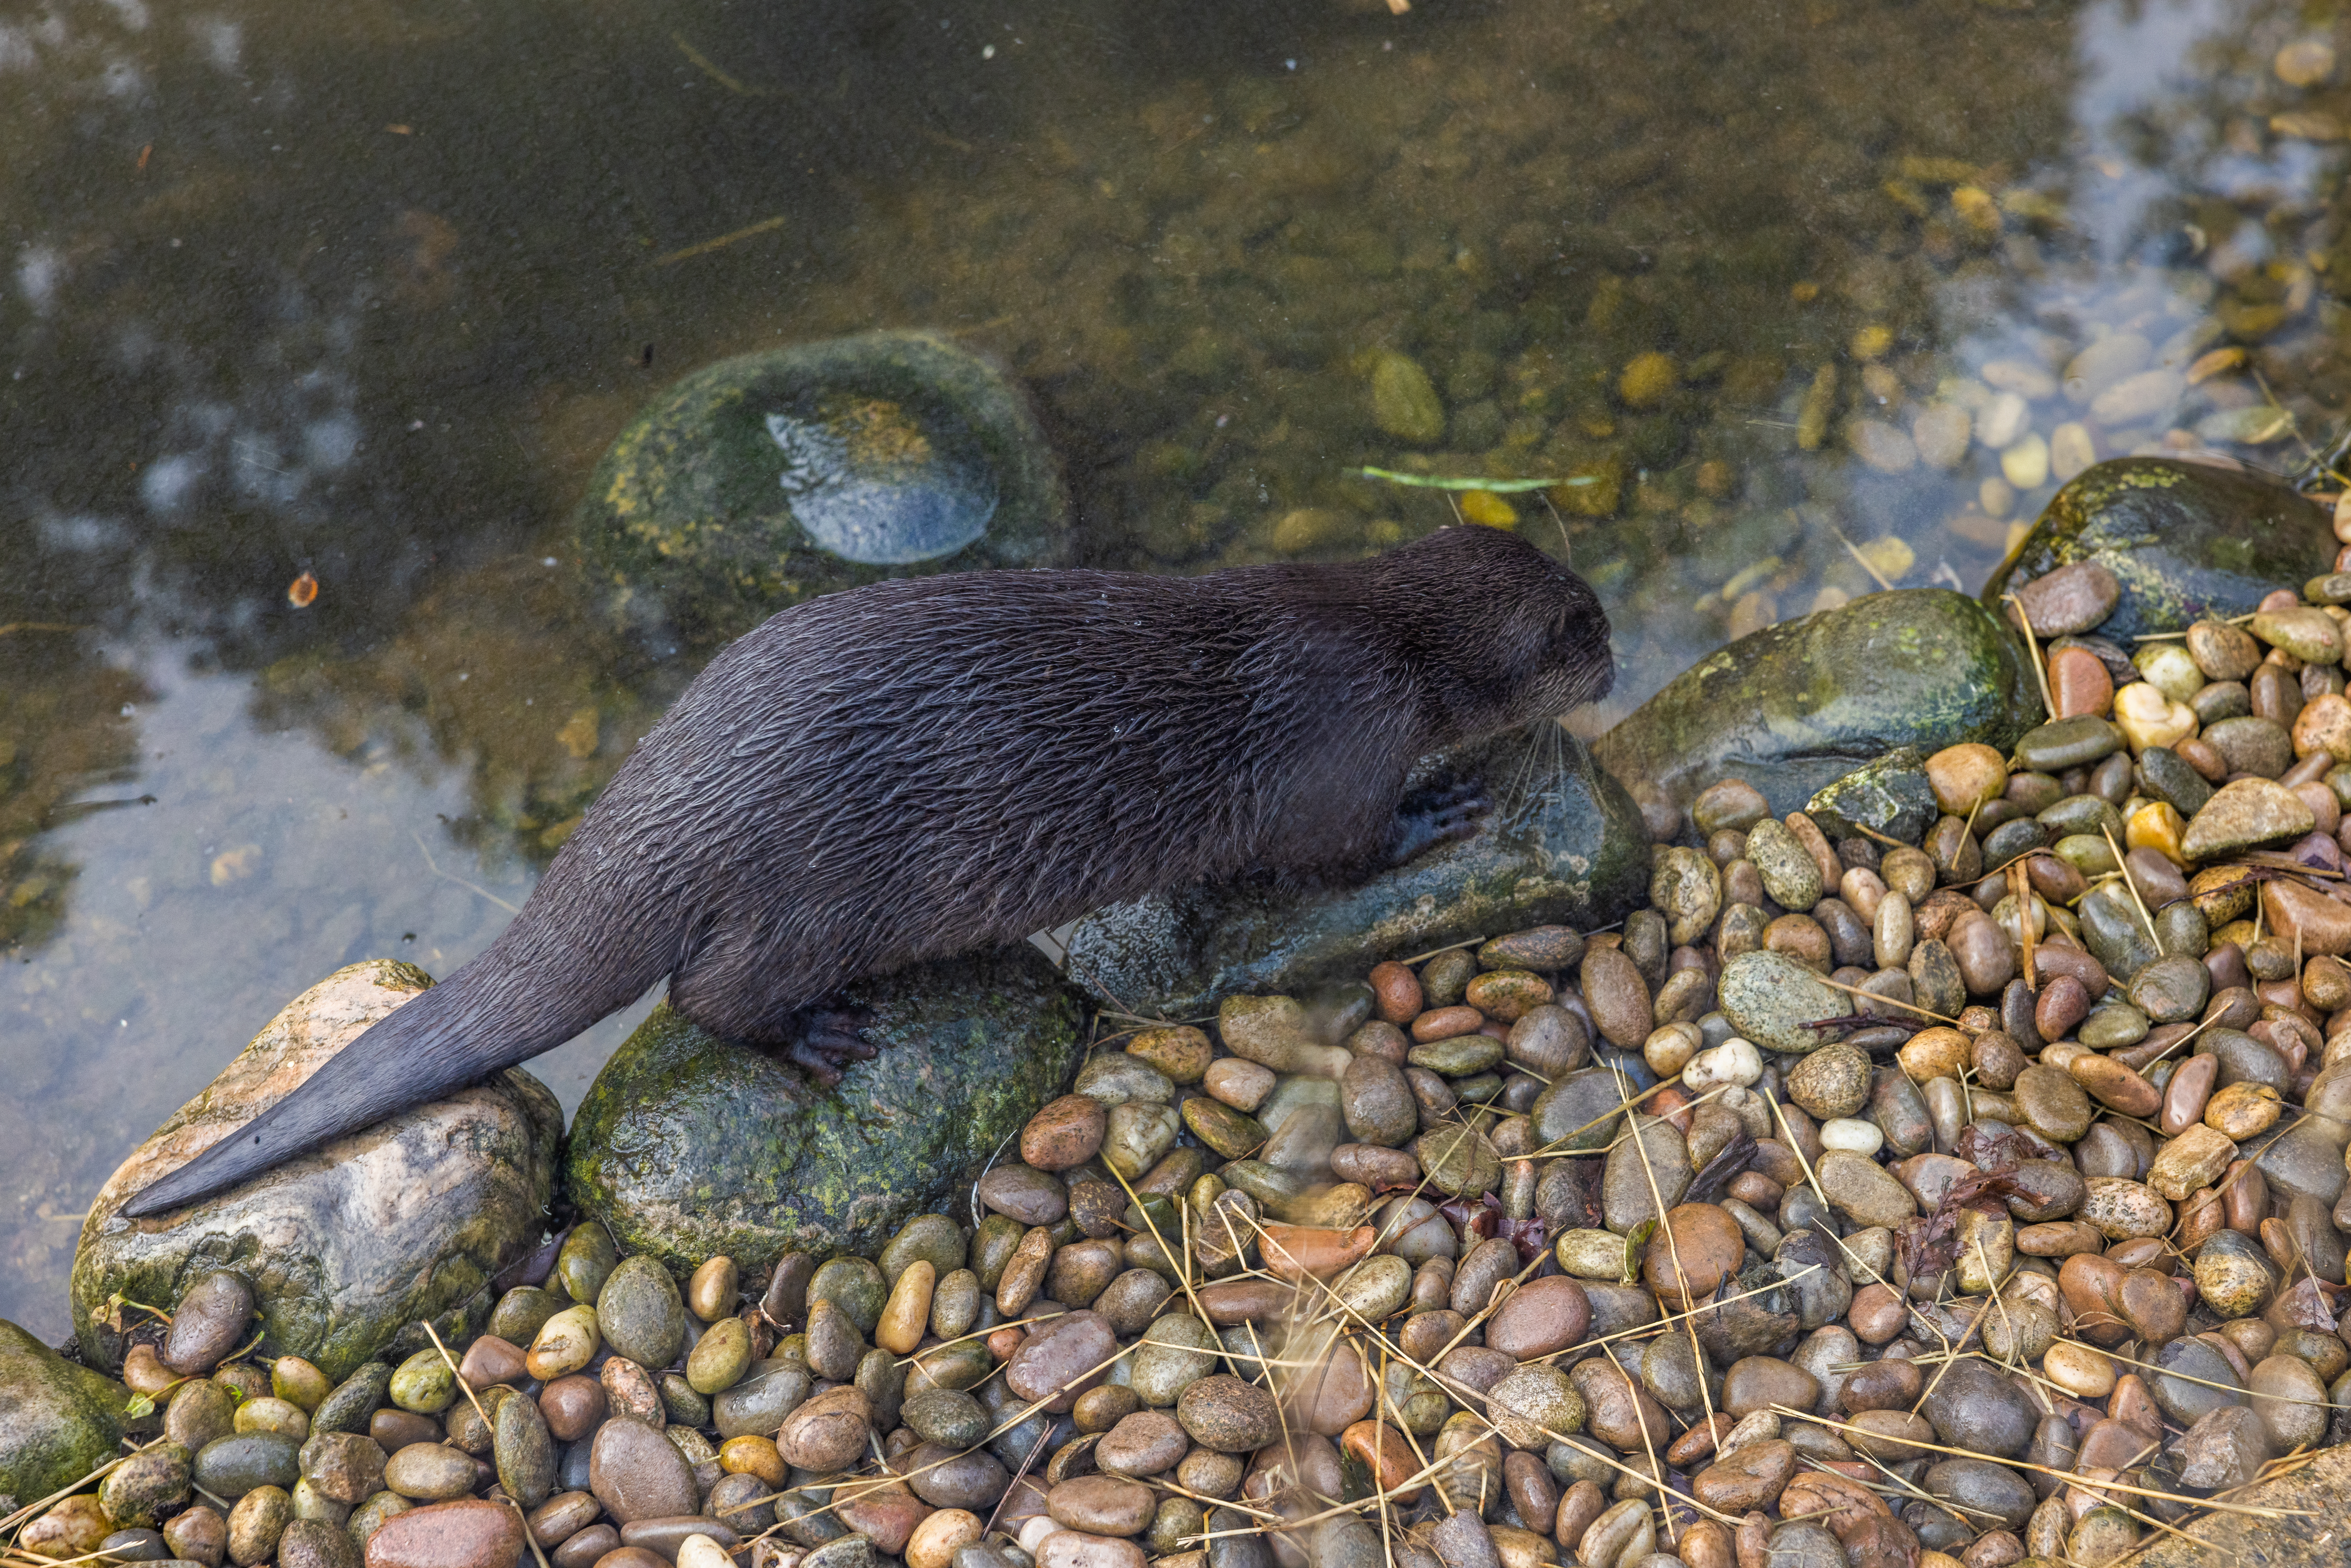 A photo of an otter walking across pebbles.